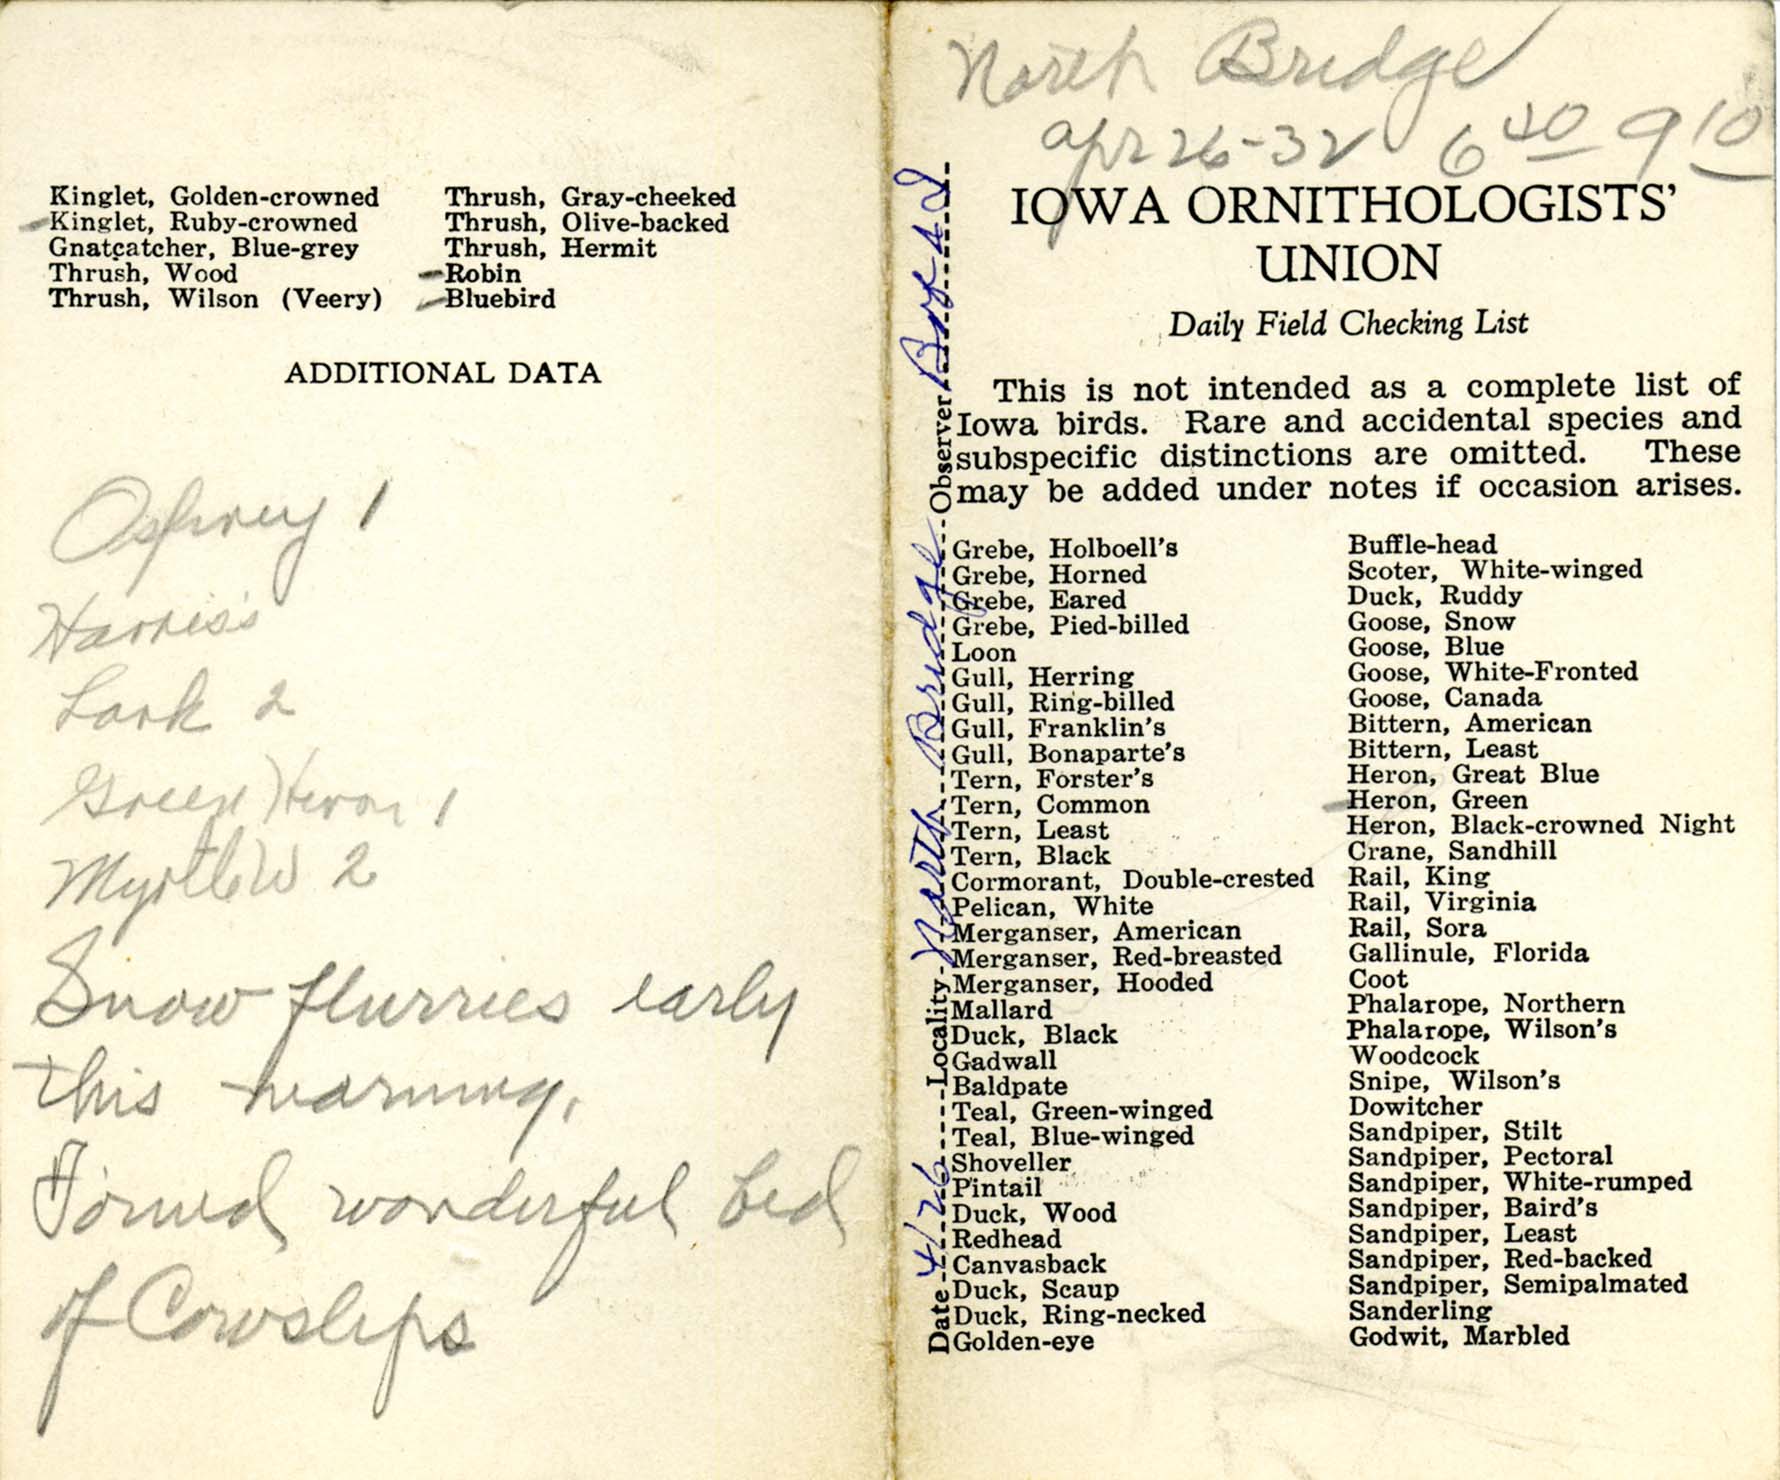 Daily field checking list, Walter Rosene, April 26, 1932